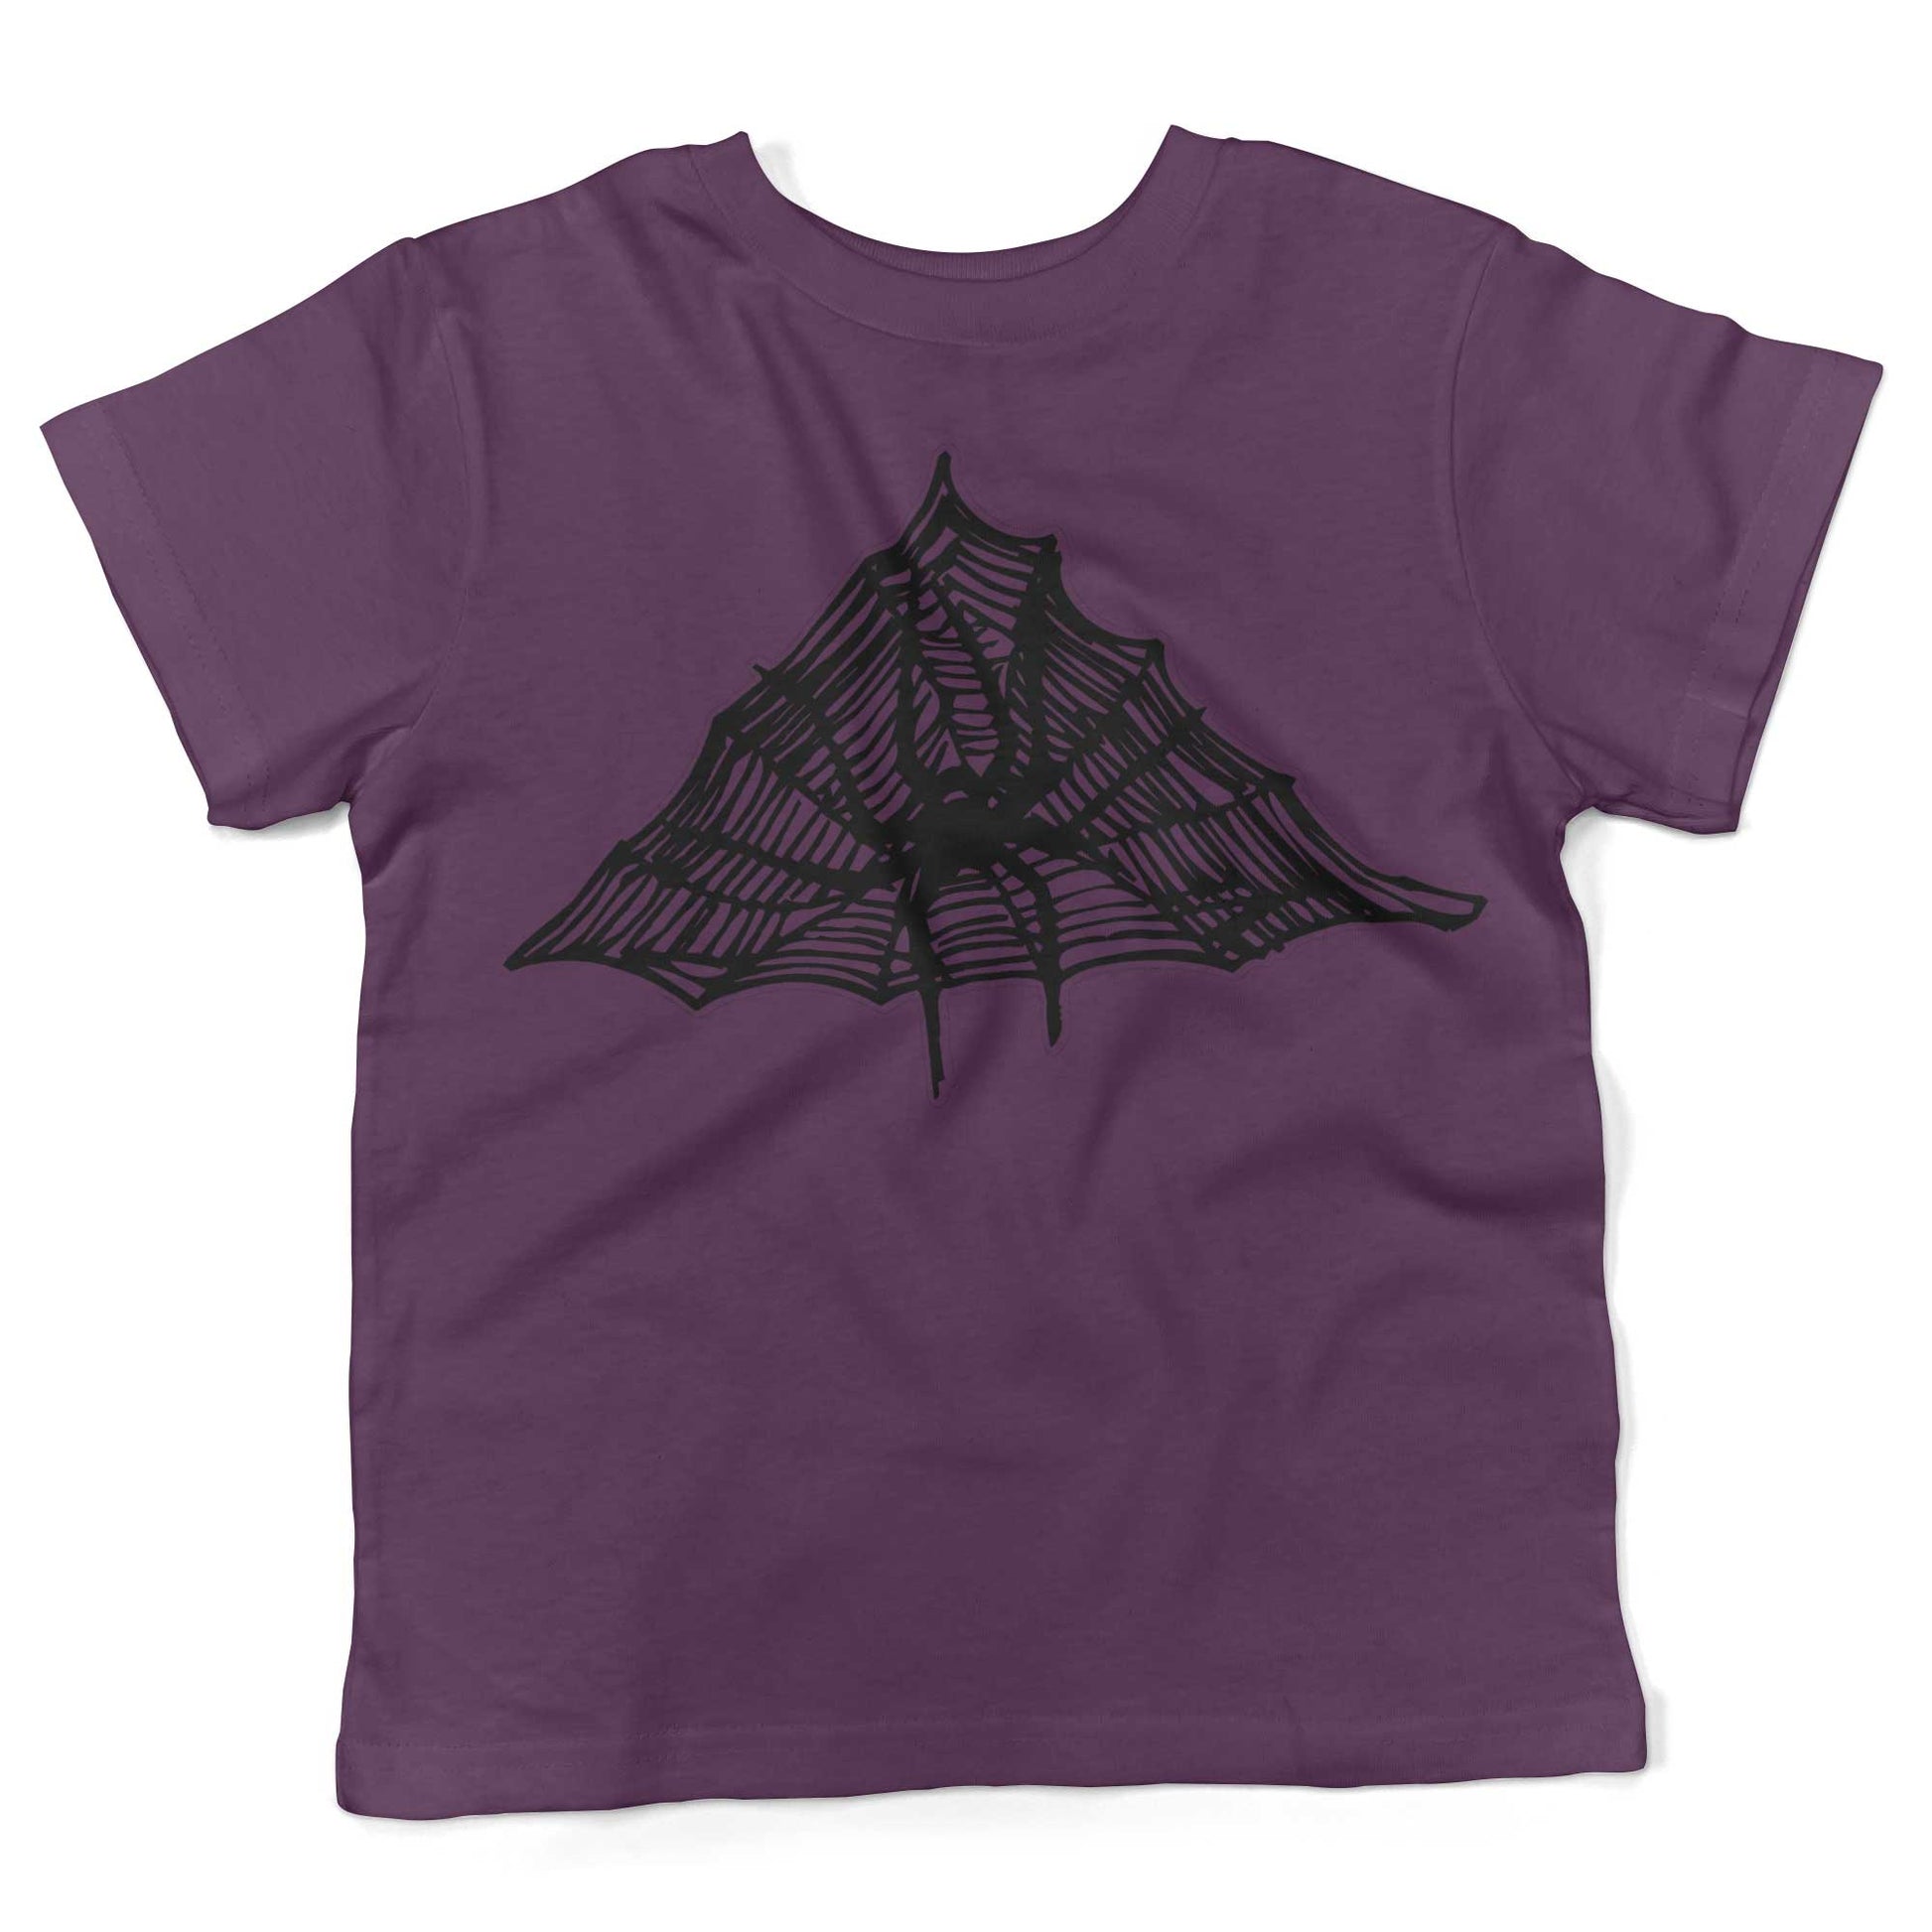 Spiderweb Toddler Shirt-Organic Purple-2T